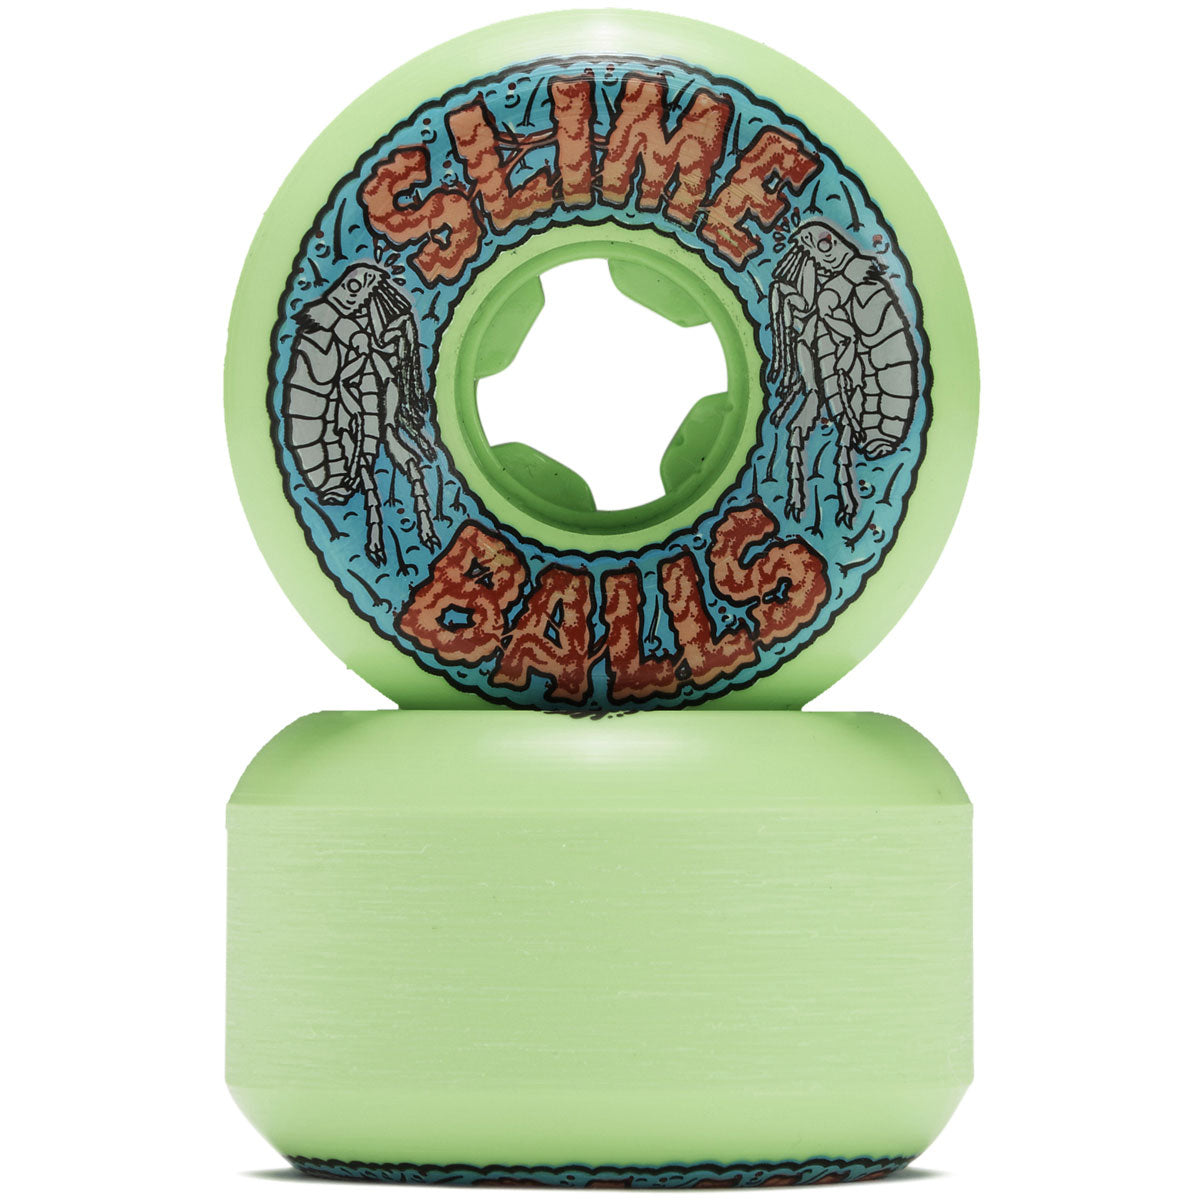 Slime Balls Flea Balls Speed Balls Skateboard Wheels - Green - 56mm image 2